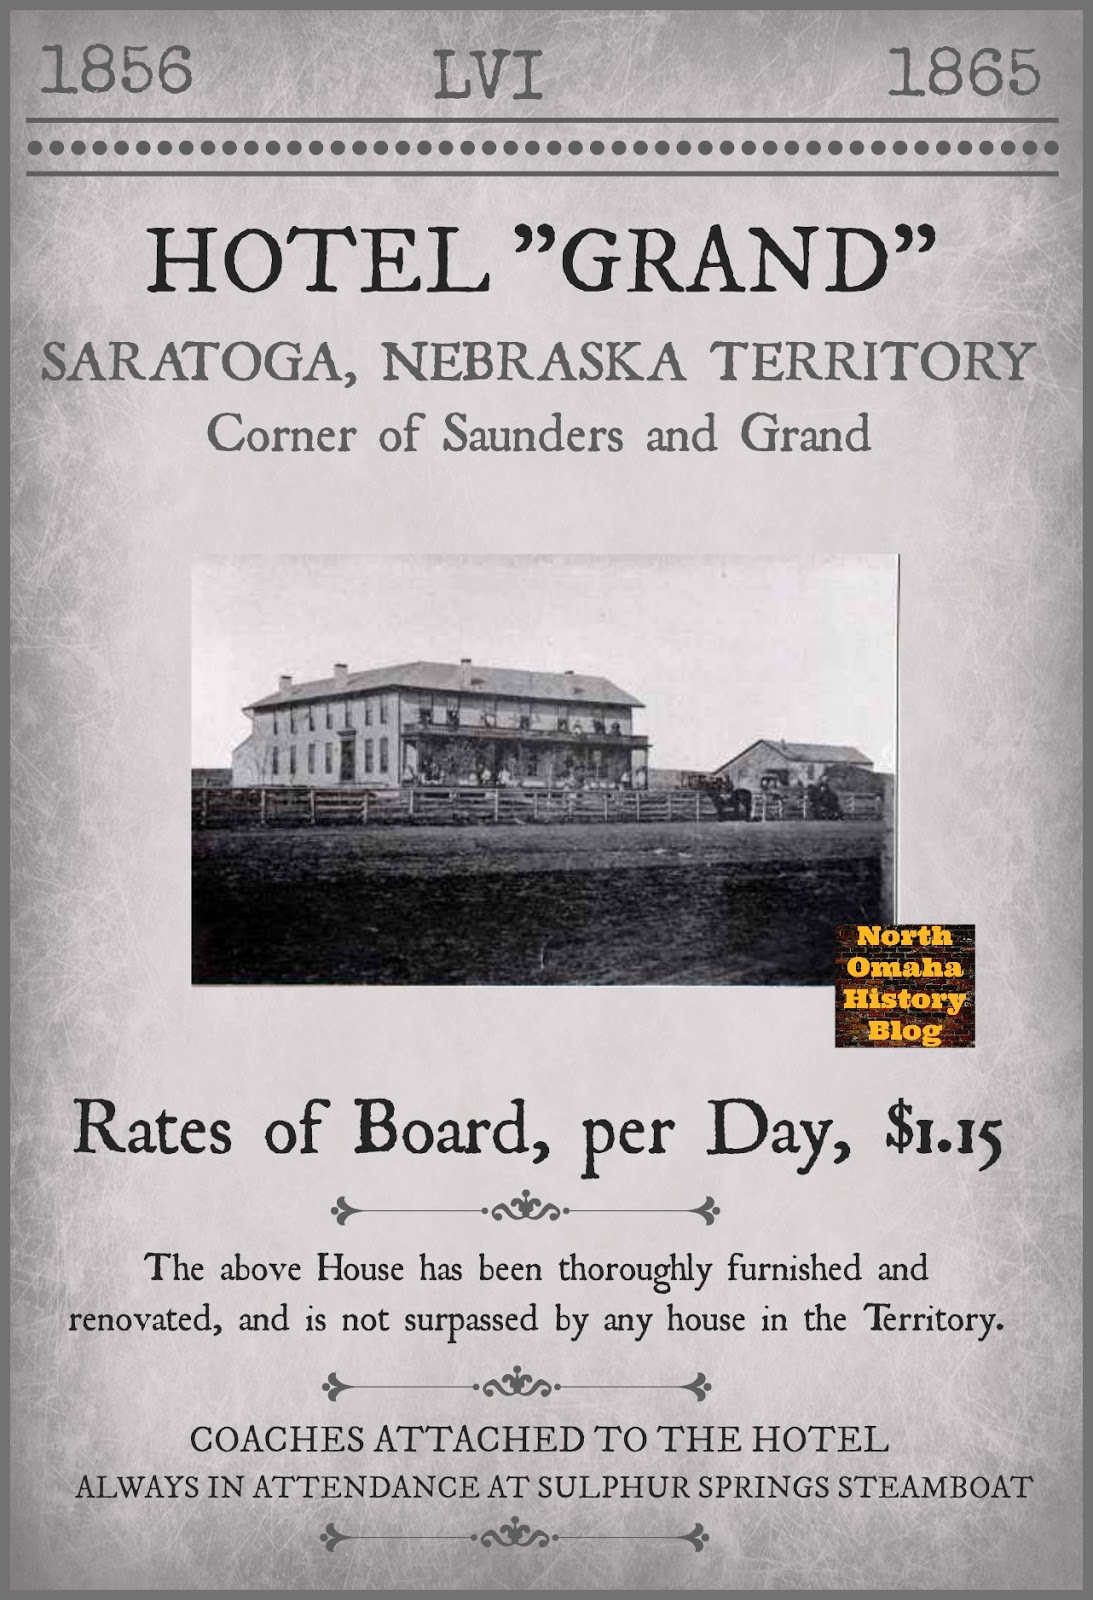 A modern flyer for the historic Grand Hotel in Saratoga, Nebraska Territory.